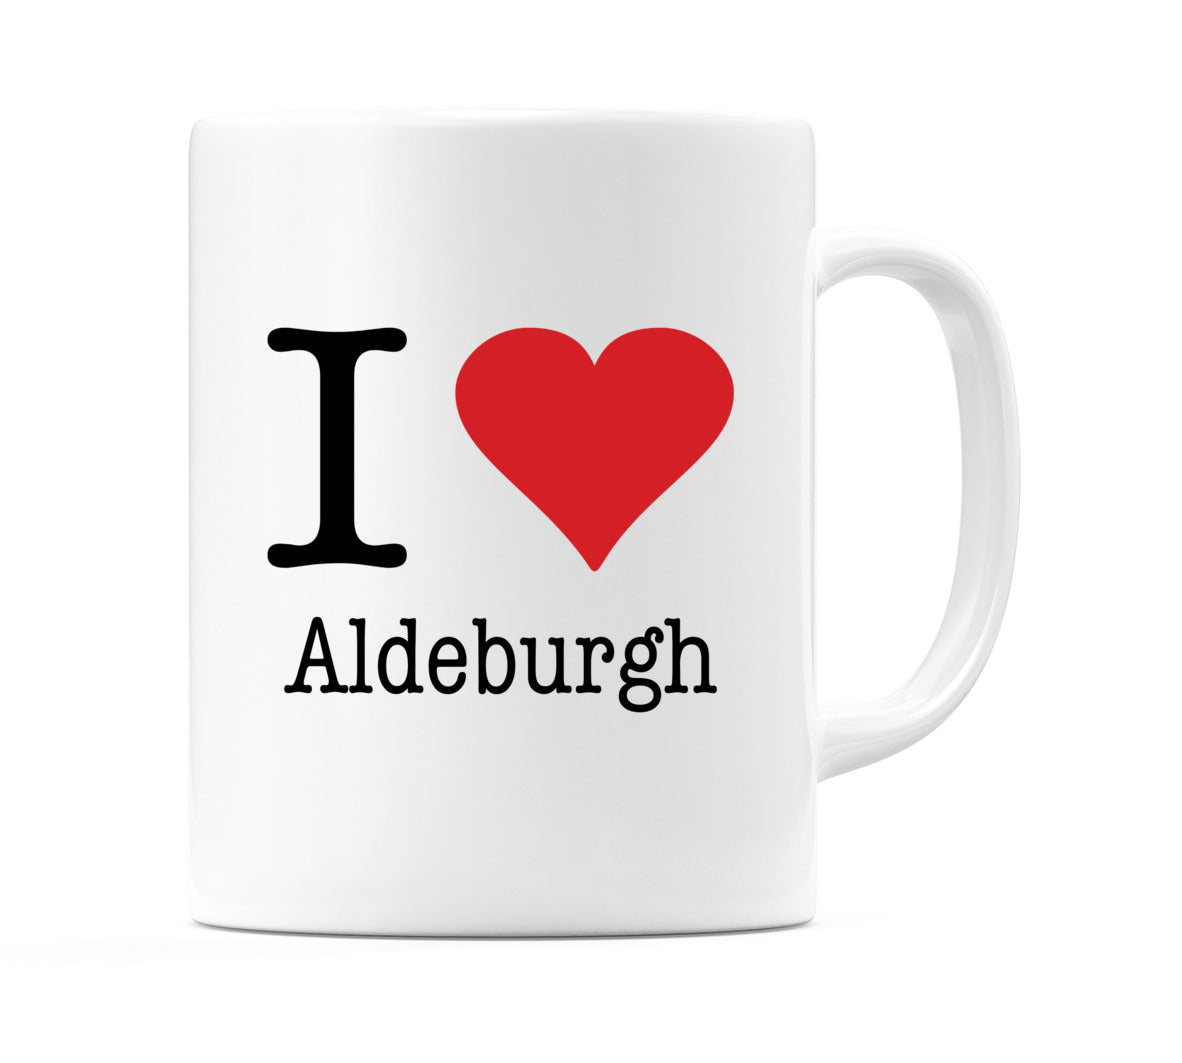 I Love Aldeburgh Mug